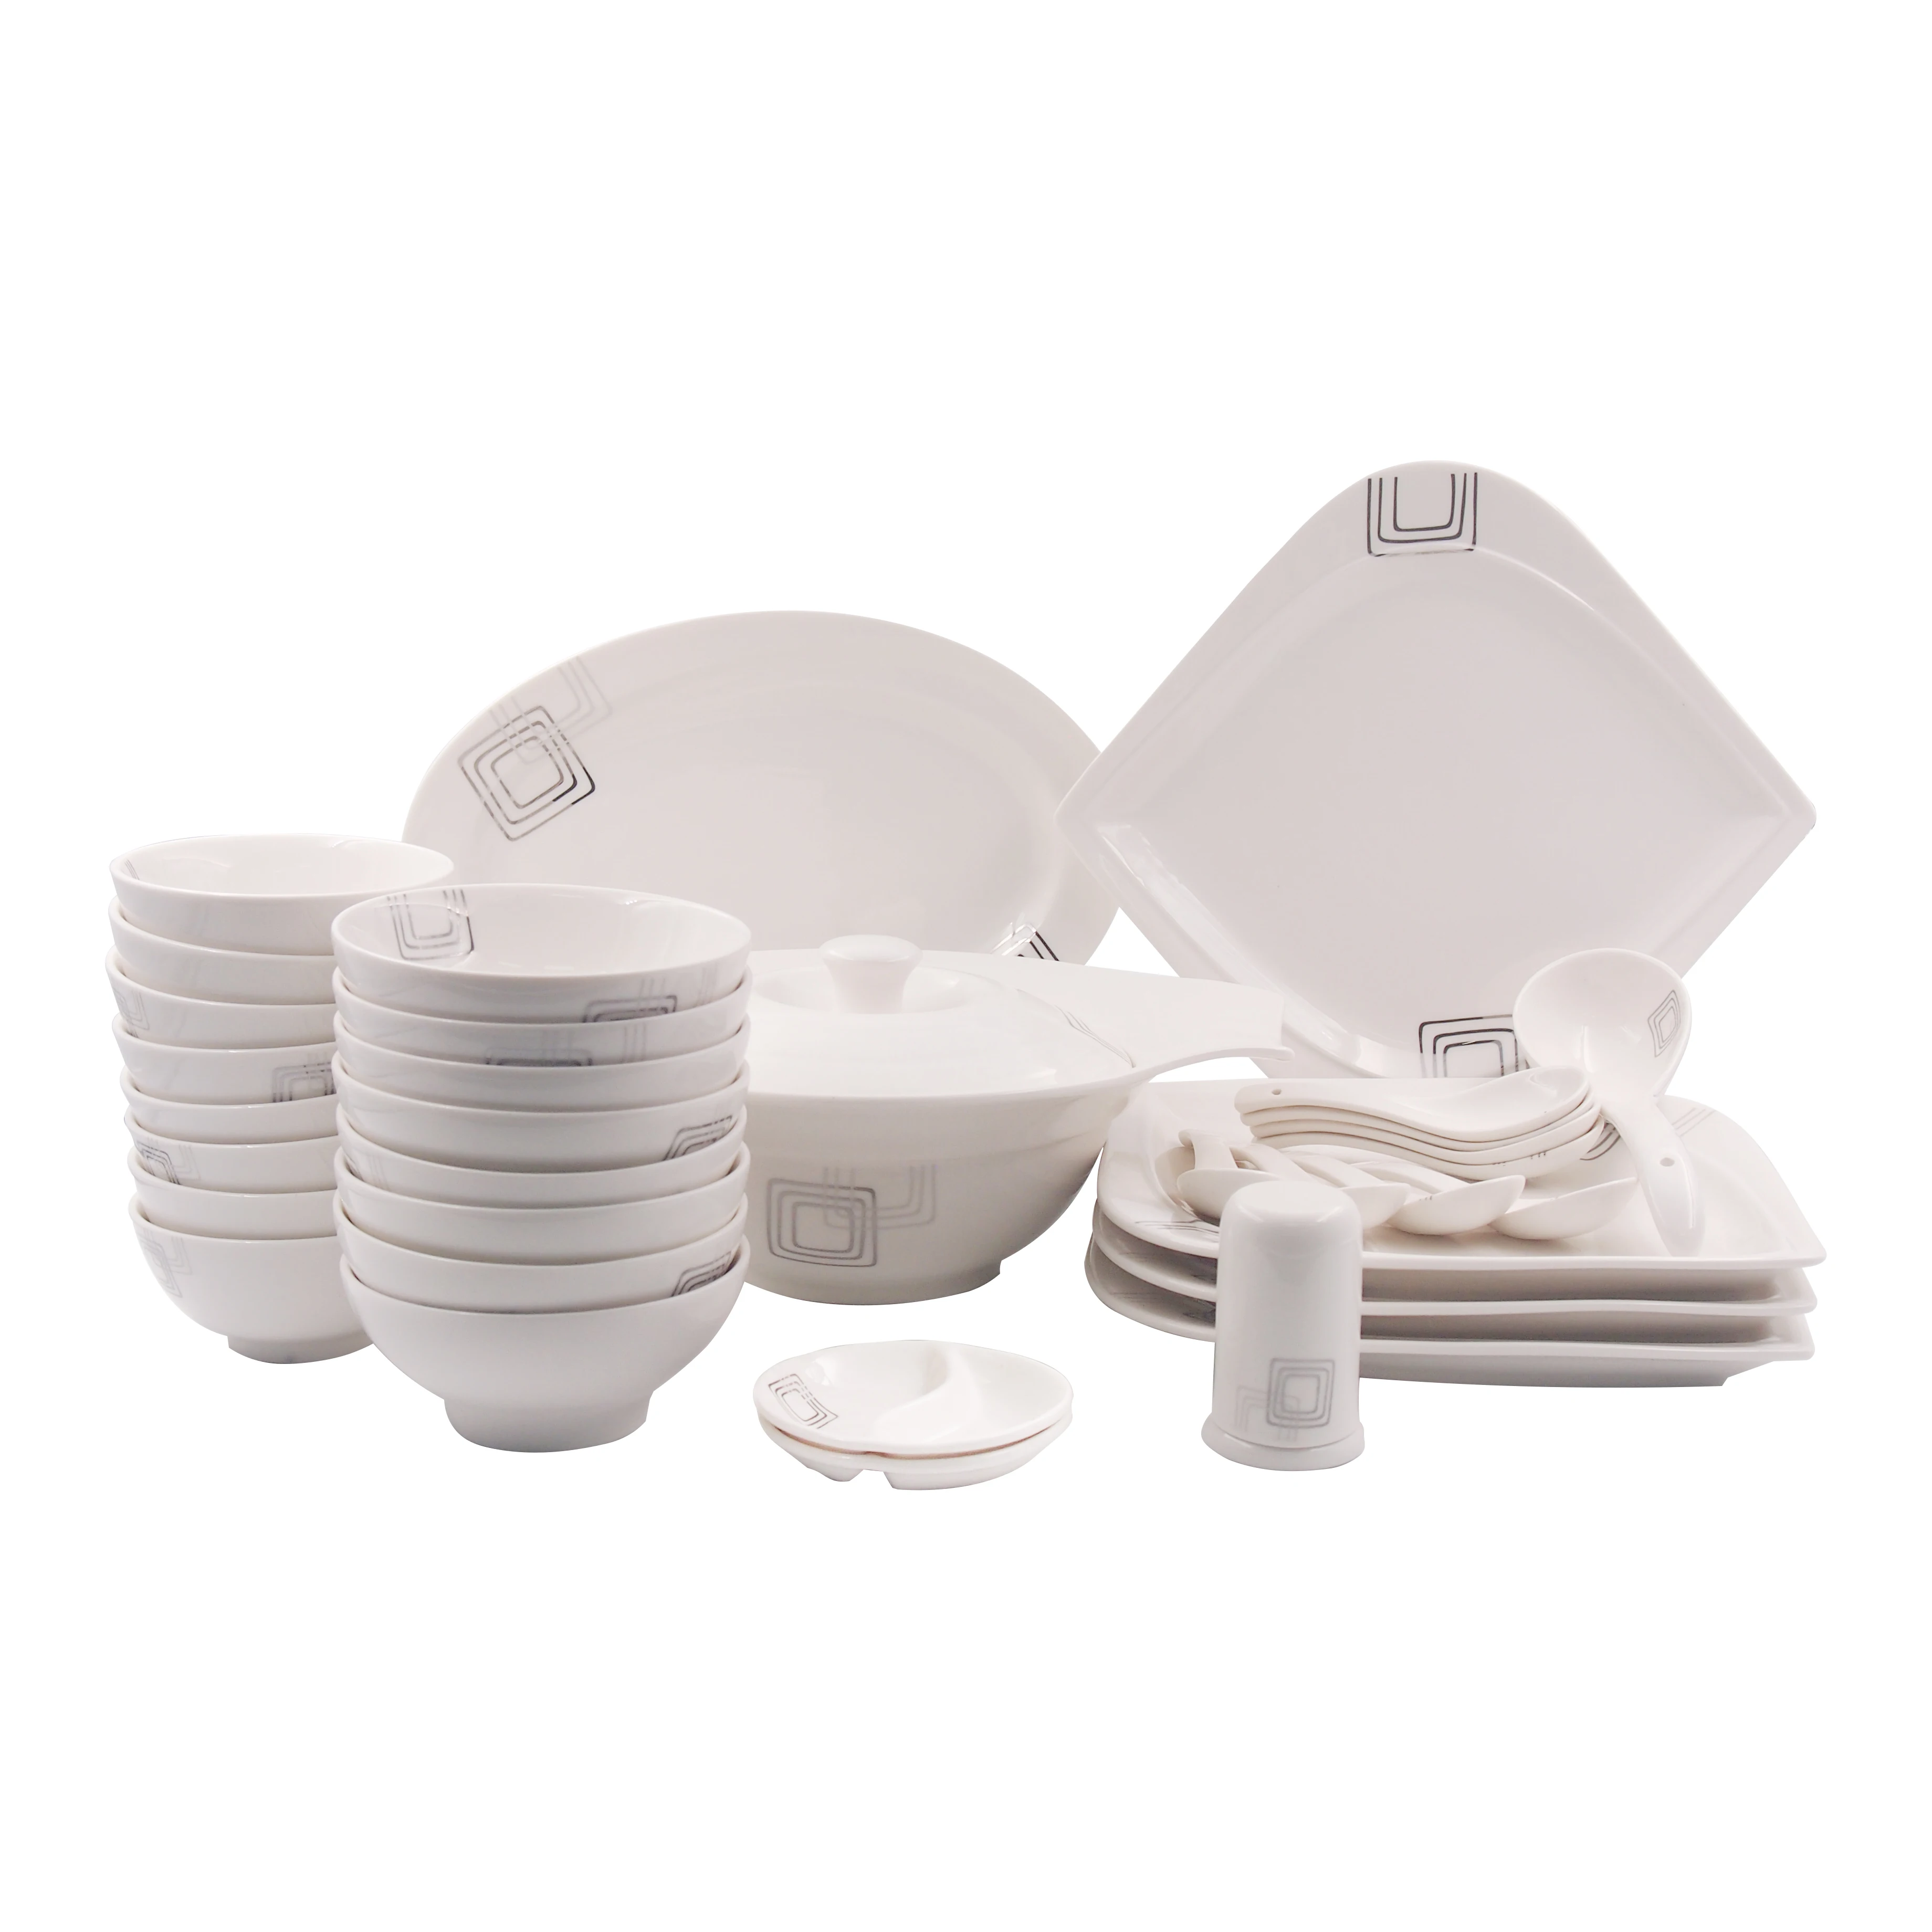 2021 New product wholesale dinnerware sets dinner set porcelain